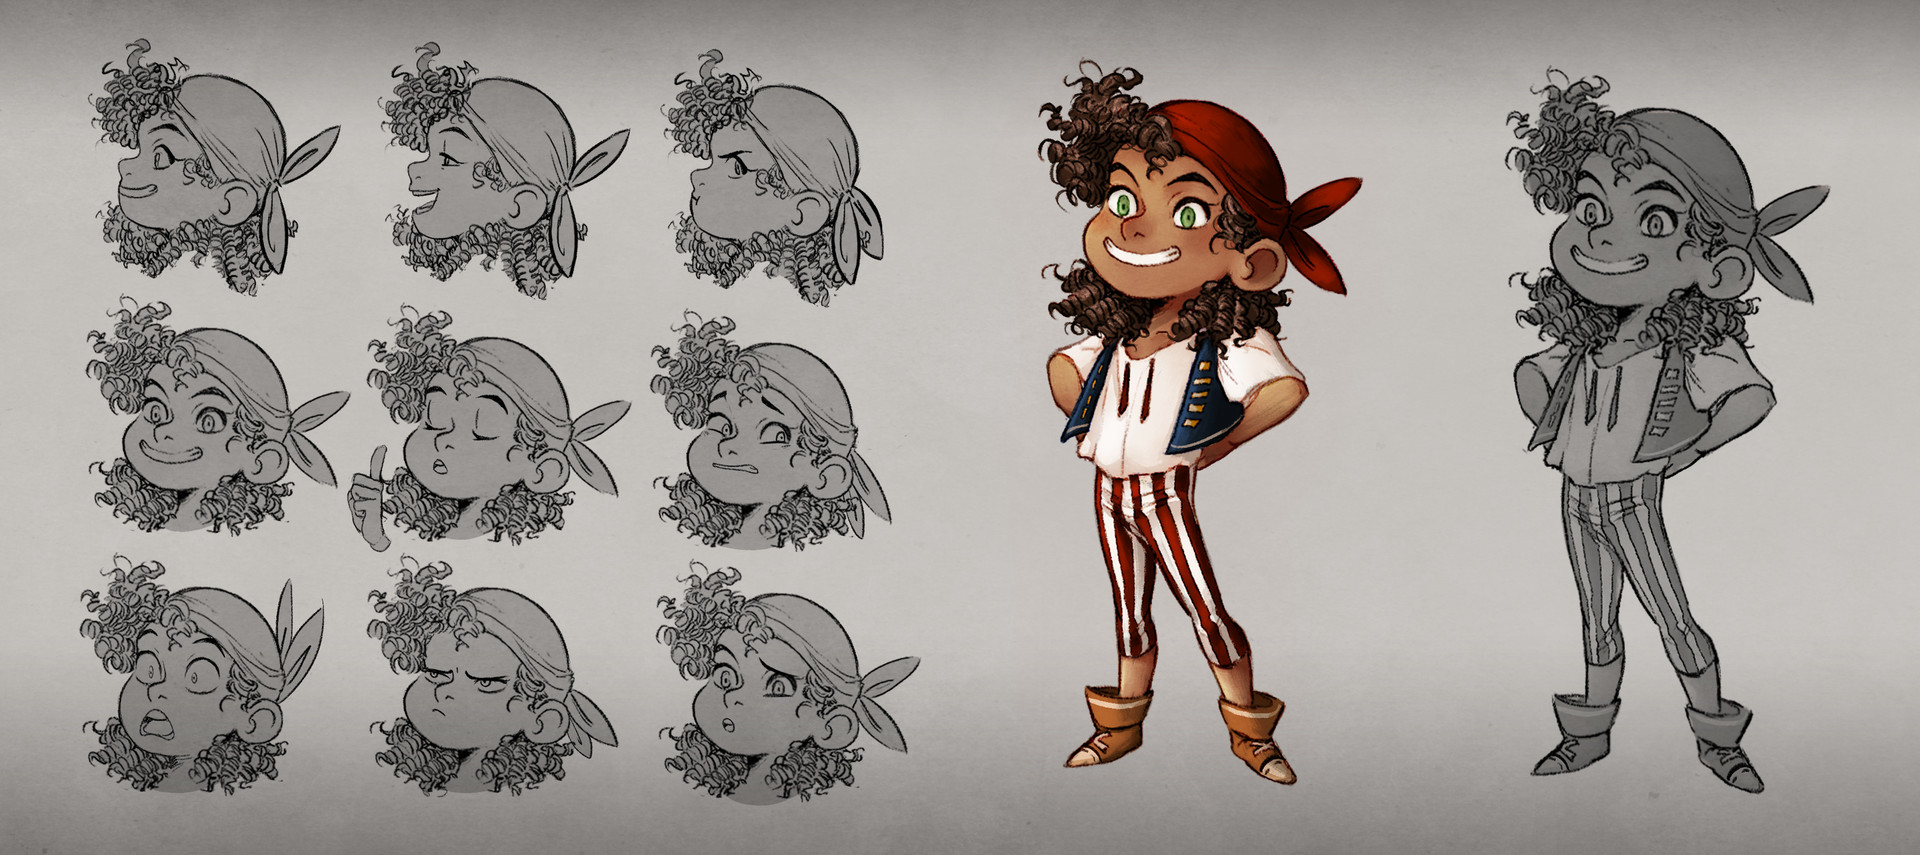 Luppi | Tallulah Potdevin - Character Design - Pirate Crew